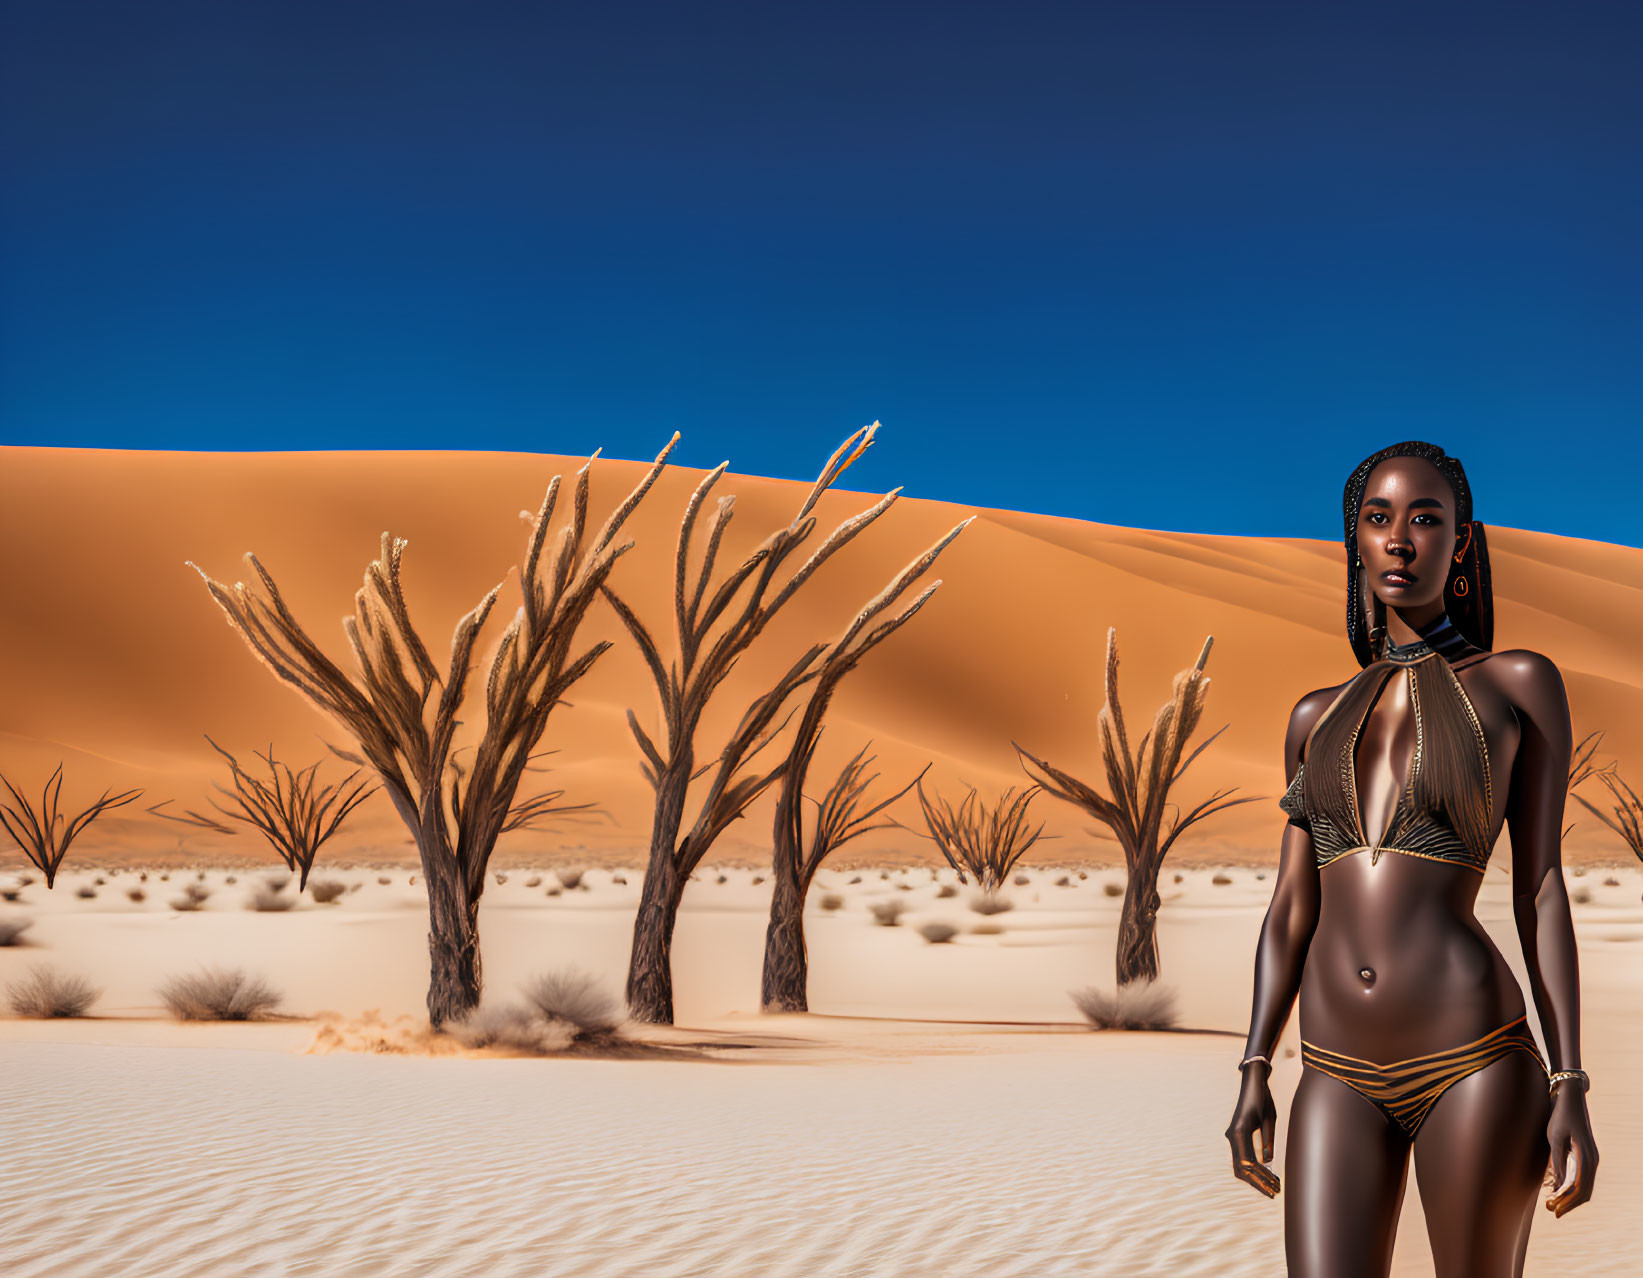 3D rendered image of woman in bikini in desert landscape